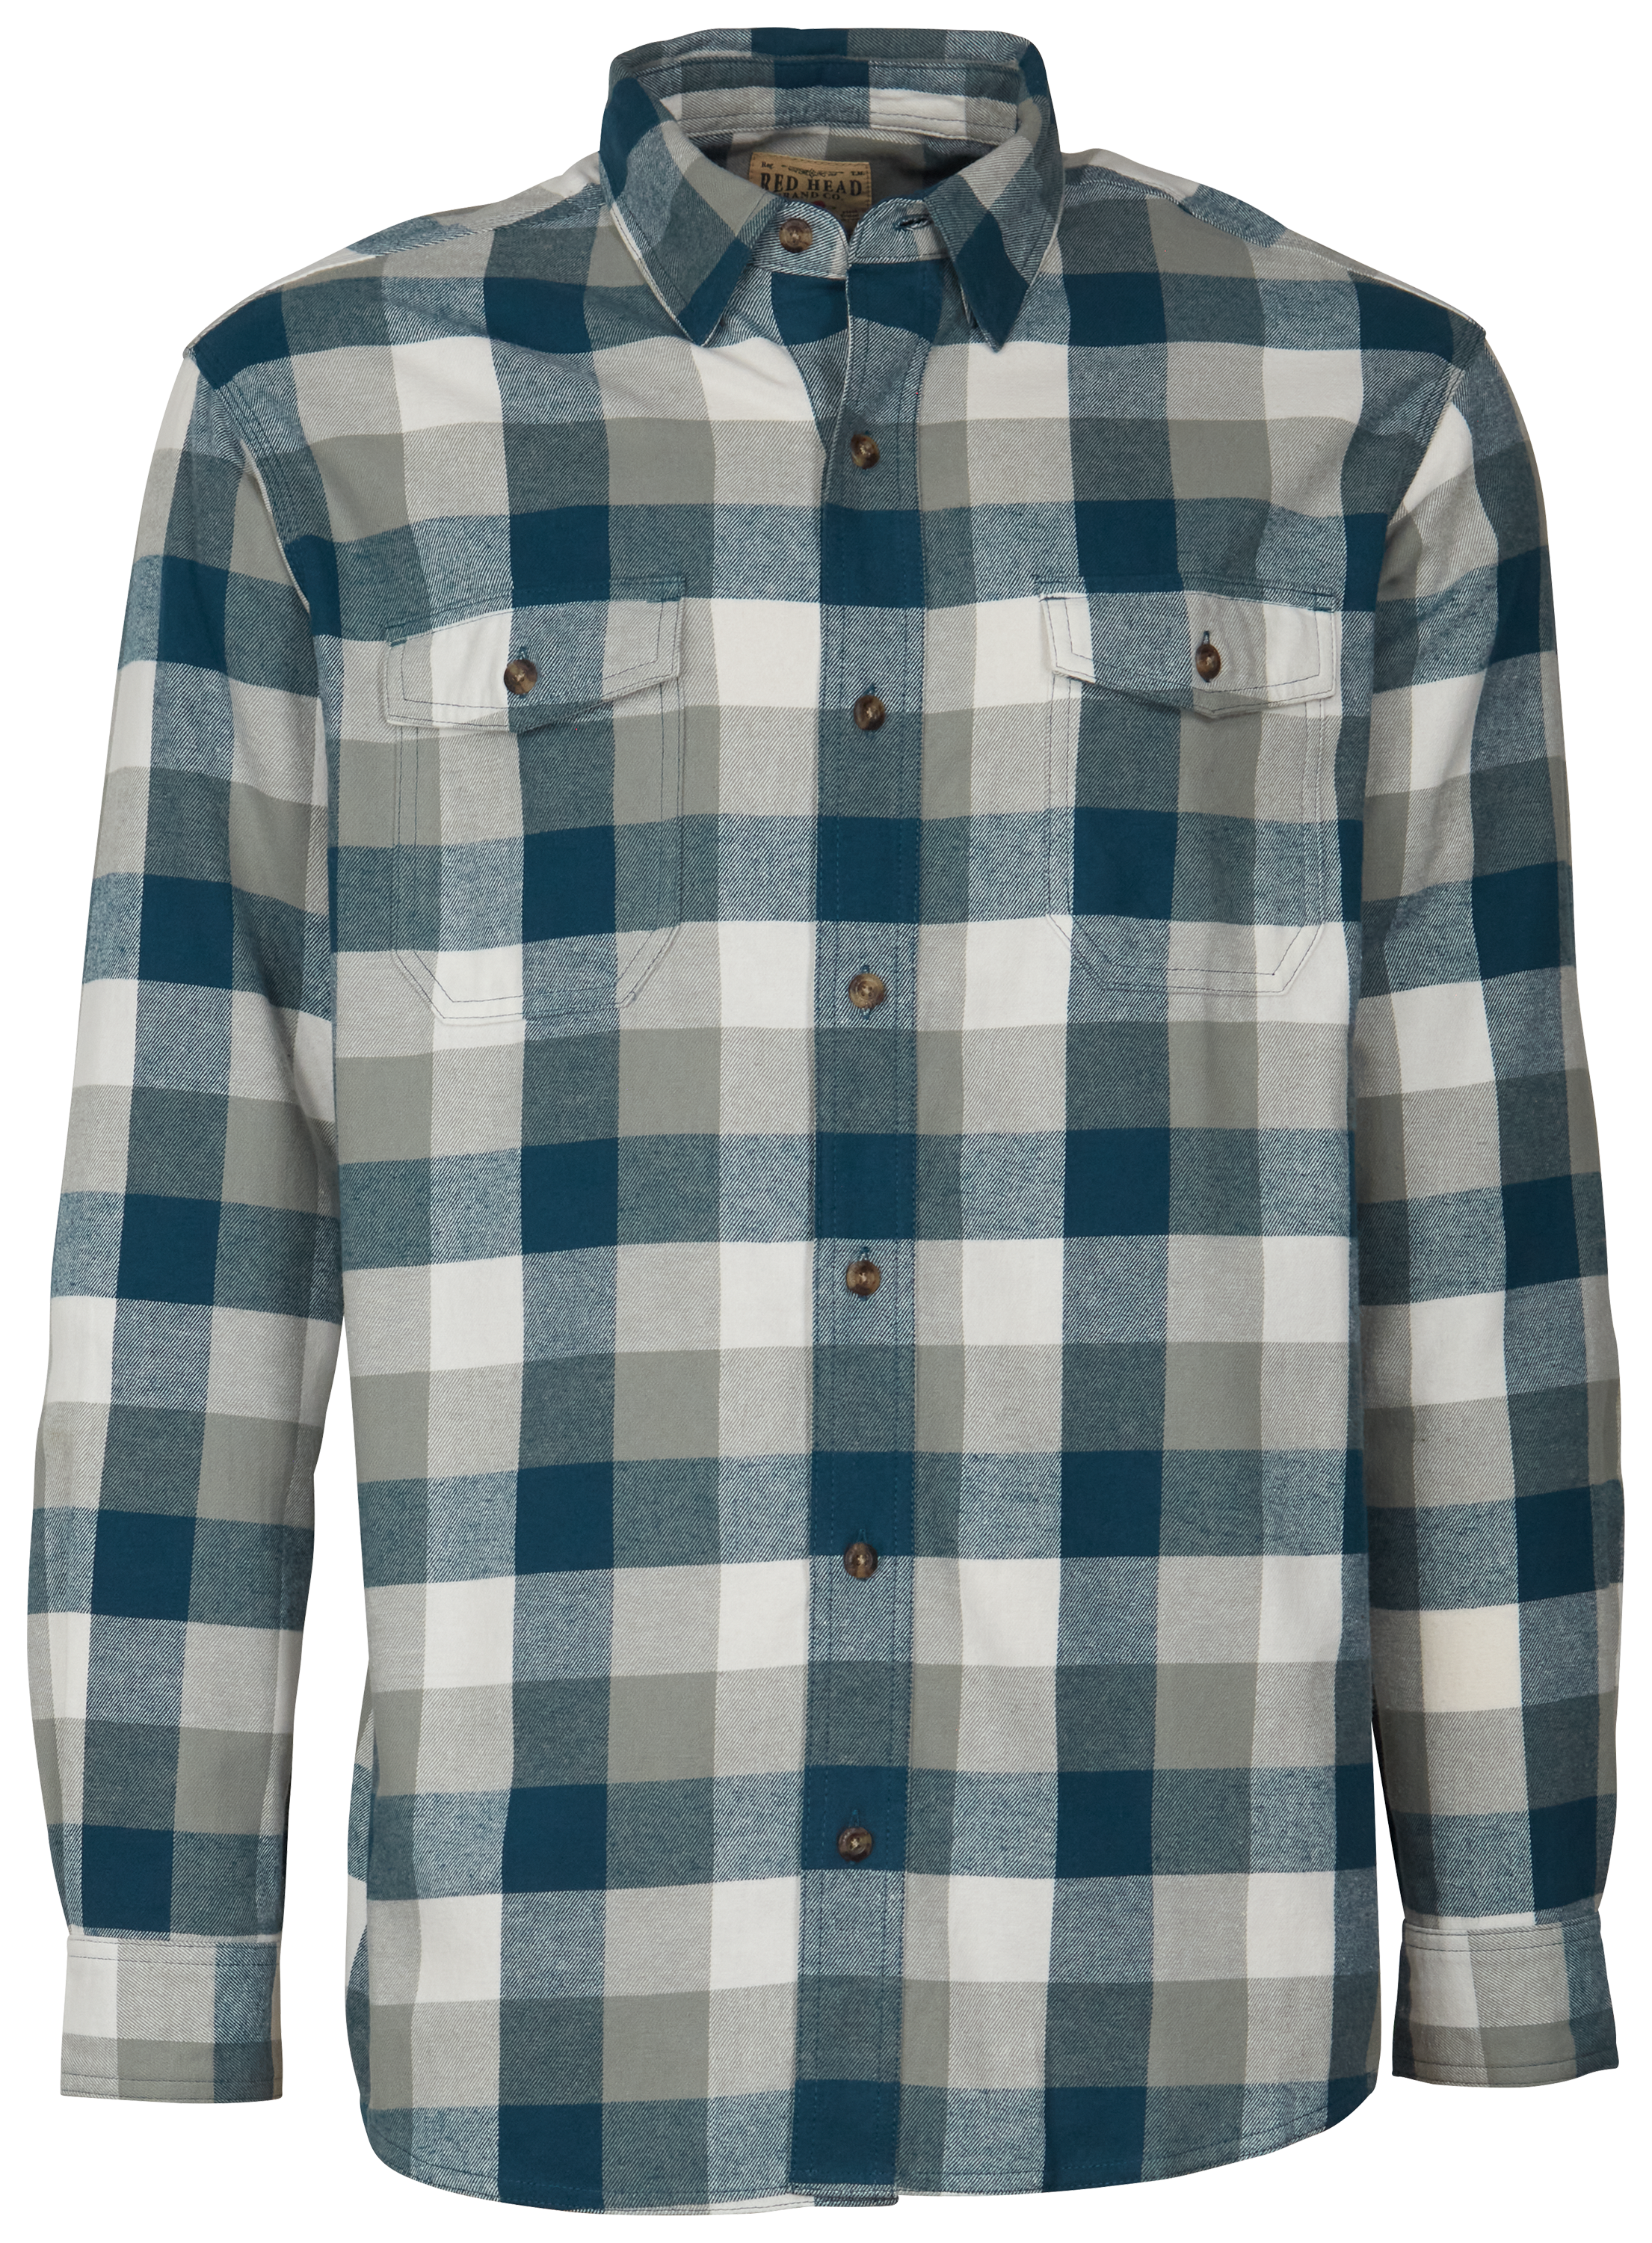 RedHead Buffalo Creek Flannel Long-Sleeve Shirt for Men - Navy/White - L